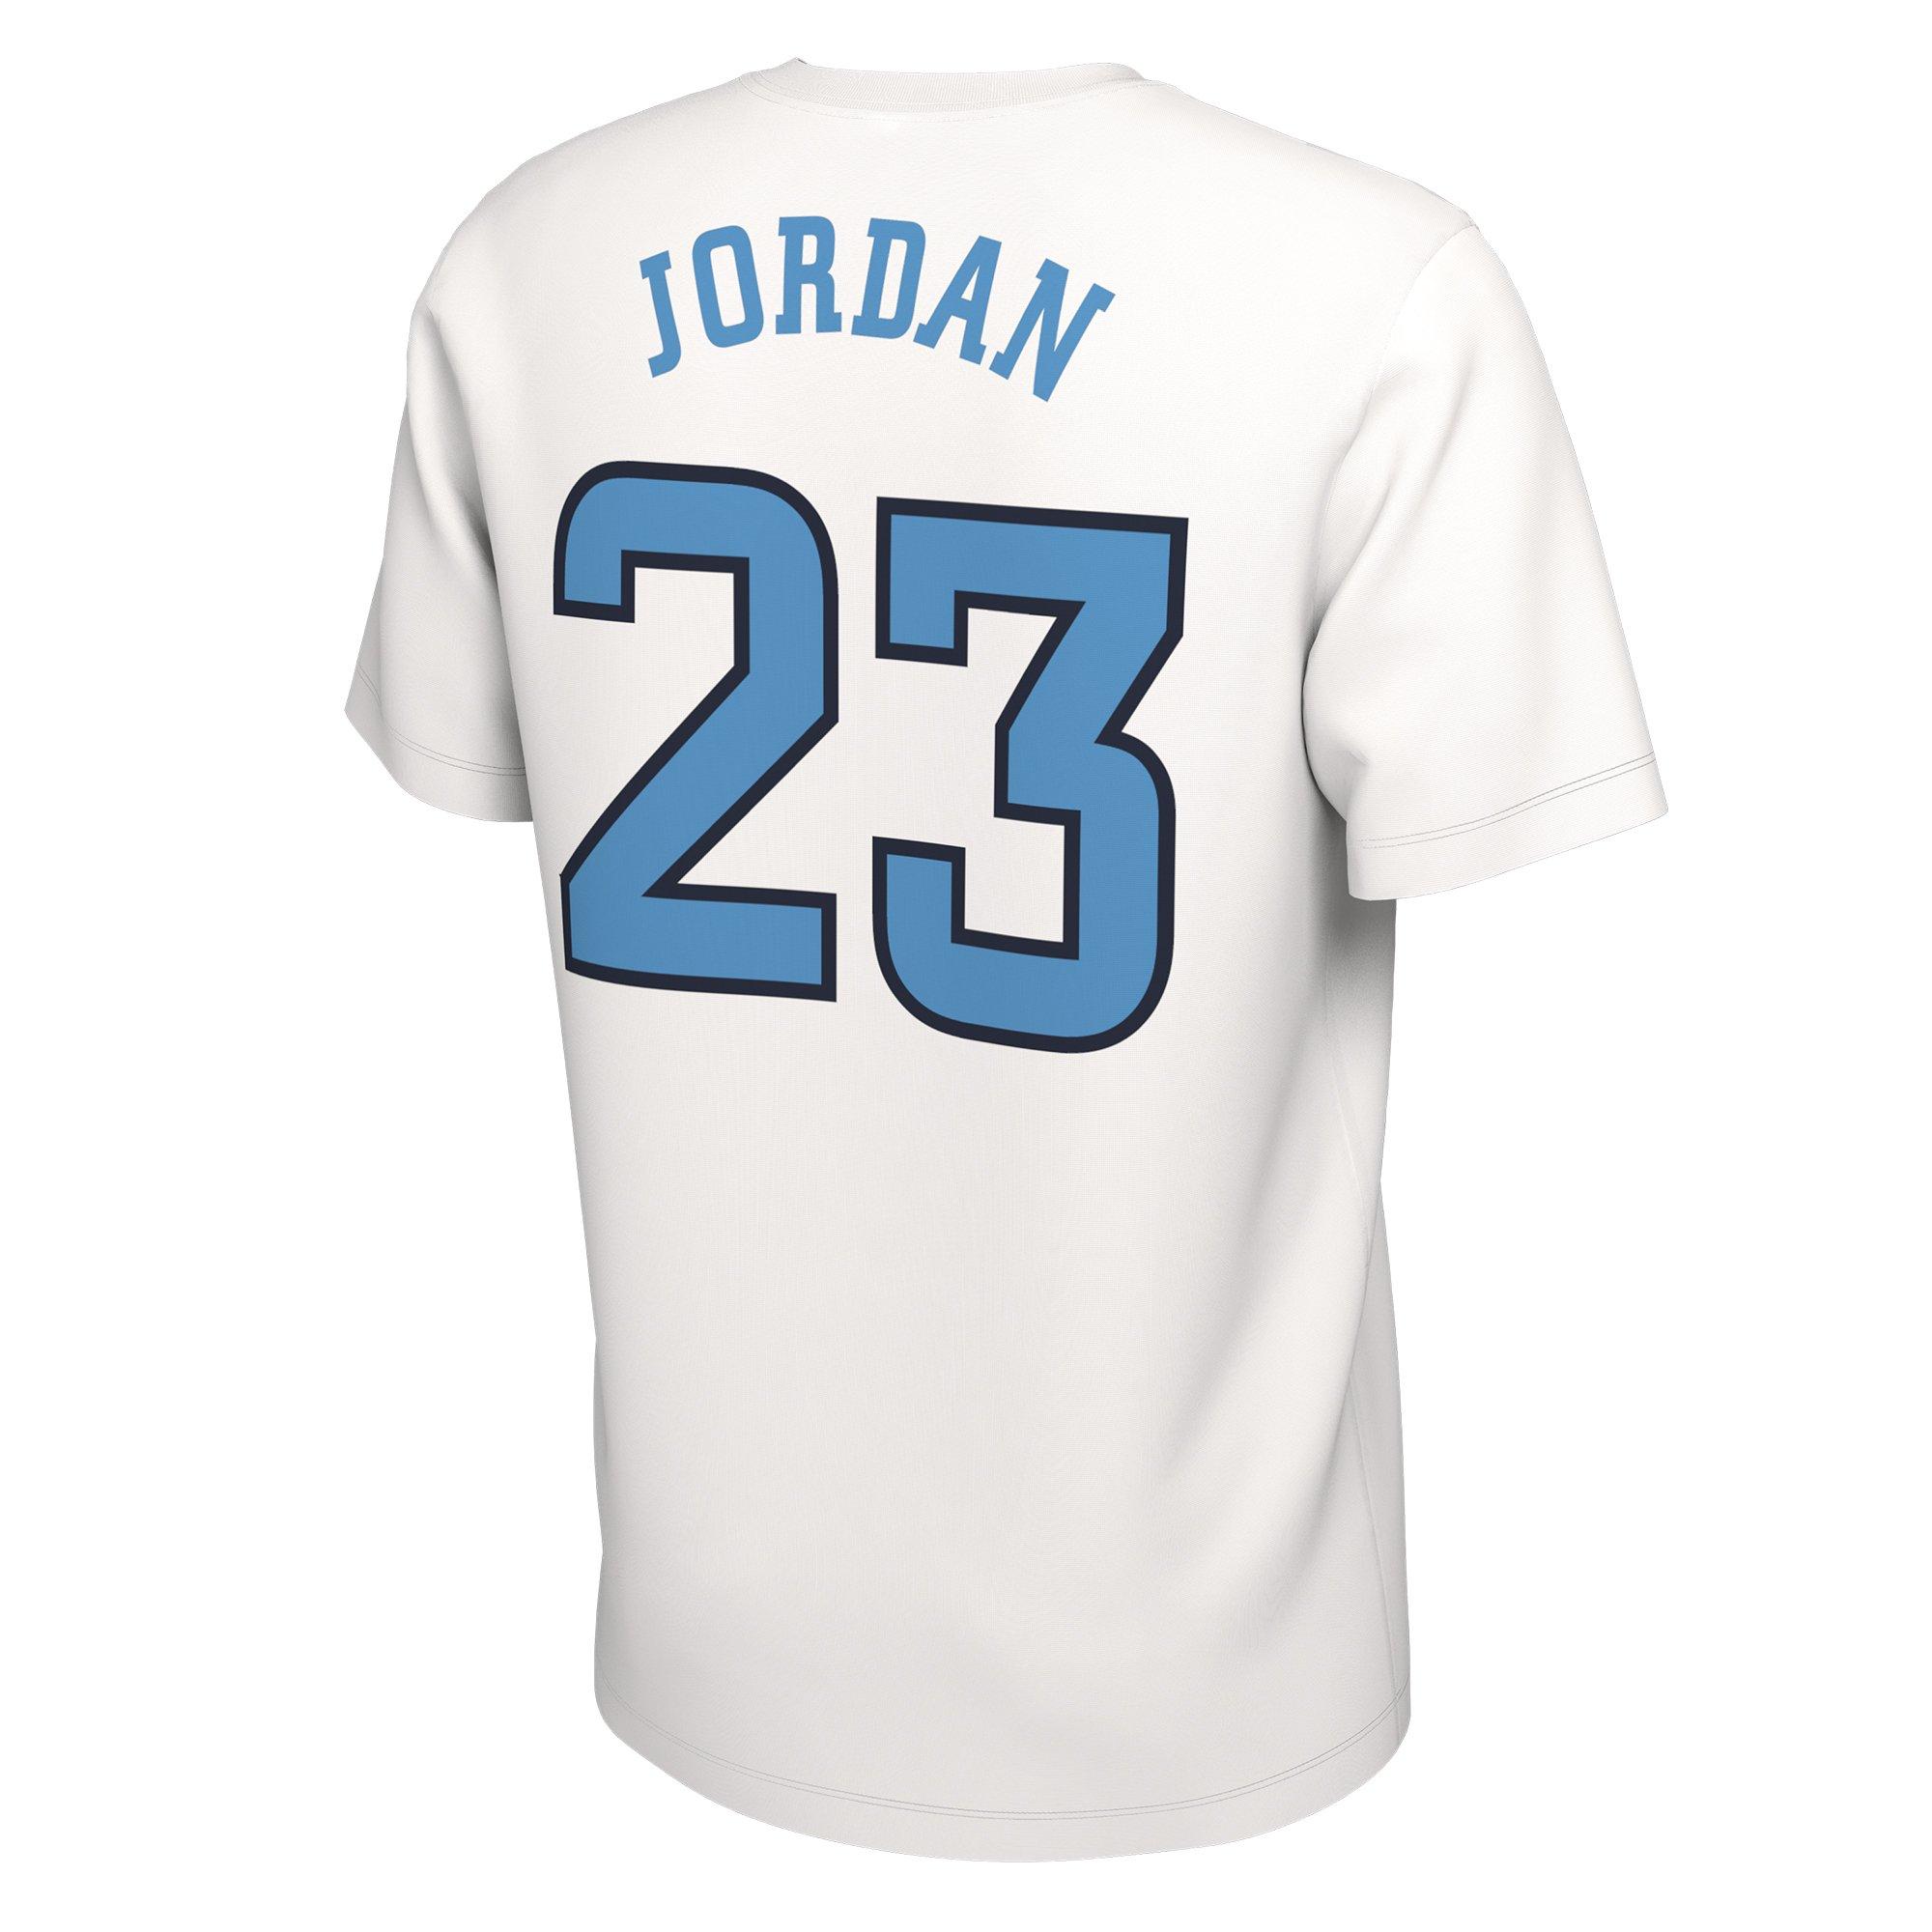 Jordan 23 Jersey -Youth L / University Blue